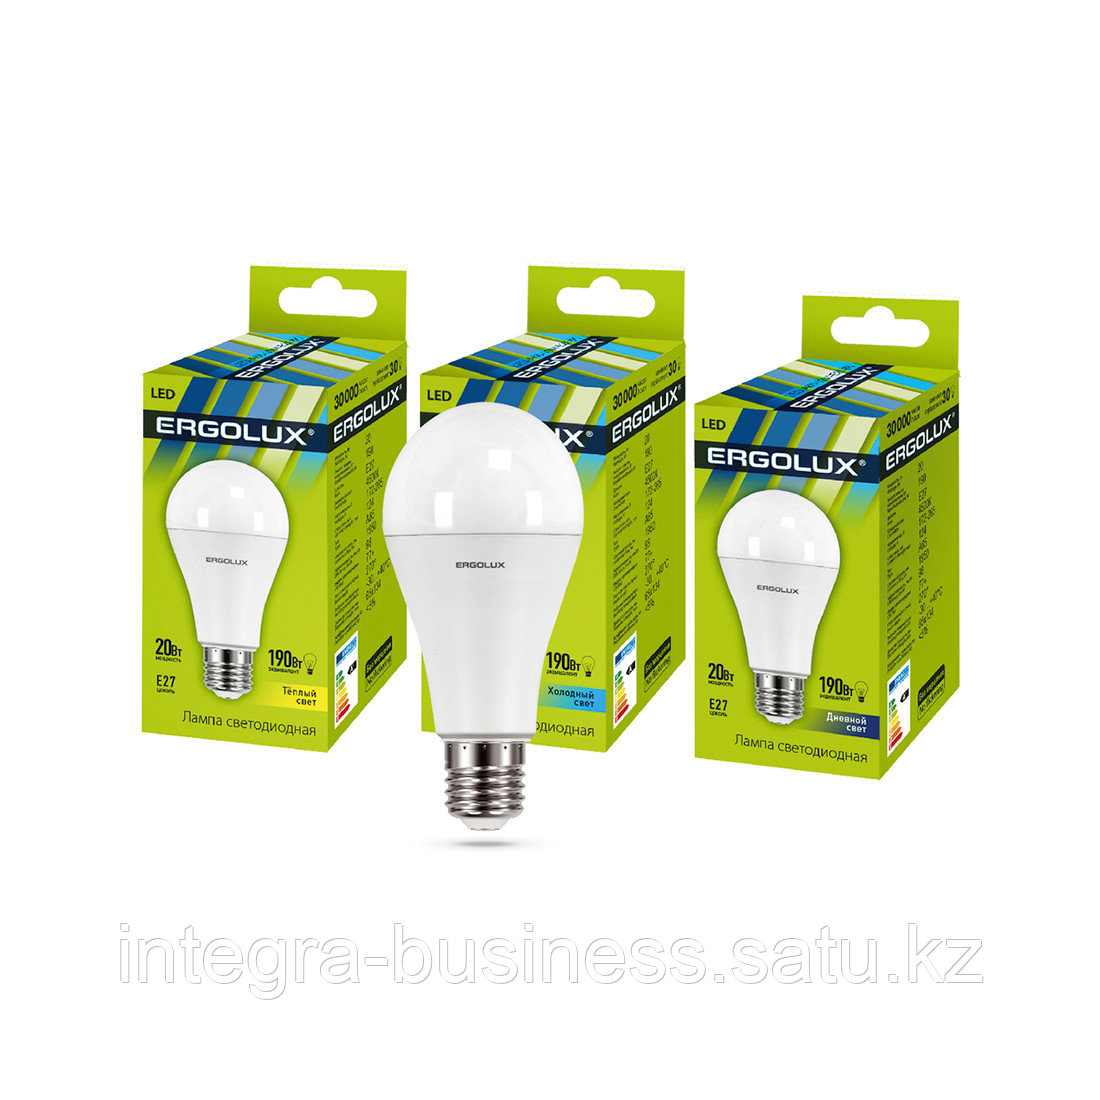 Эл. лампа светодиодная Ergolux LED-A65-20W-E27-6K, Дневной